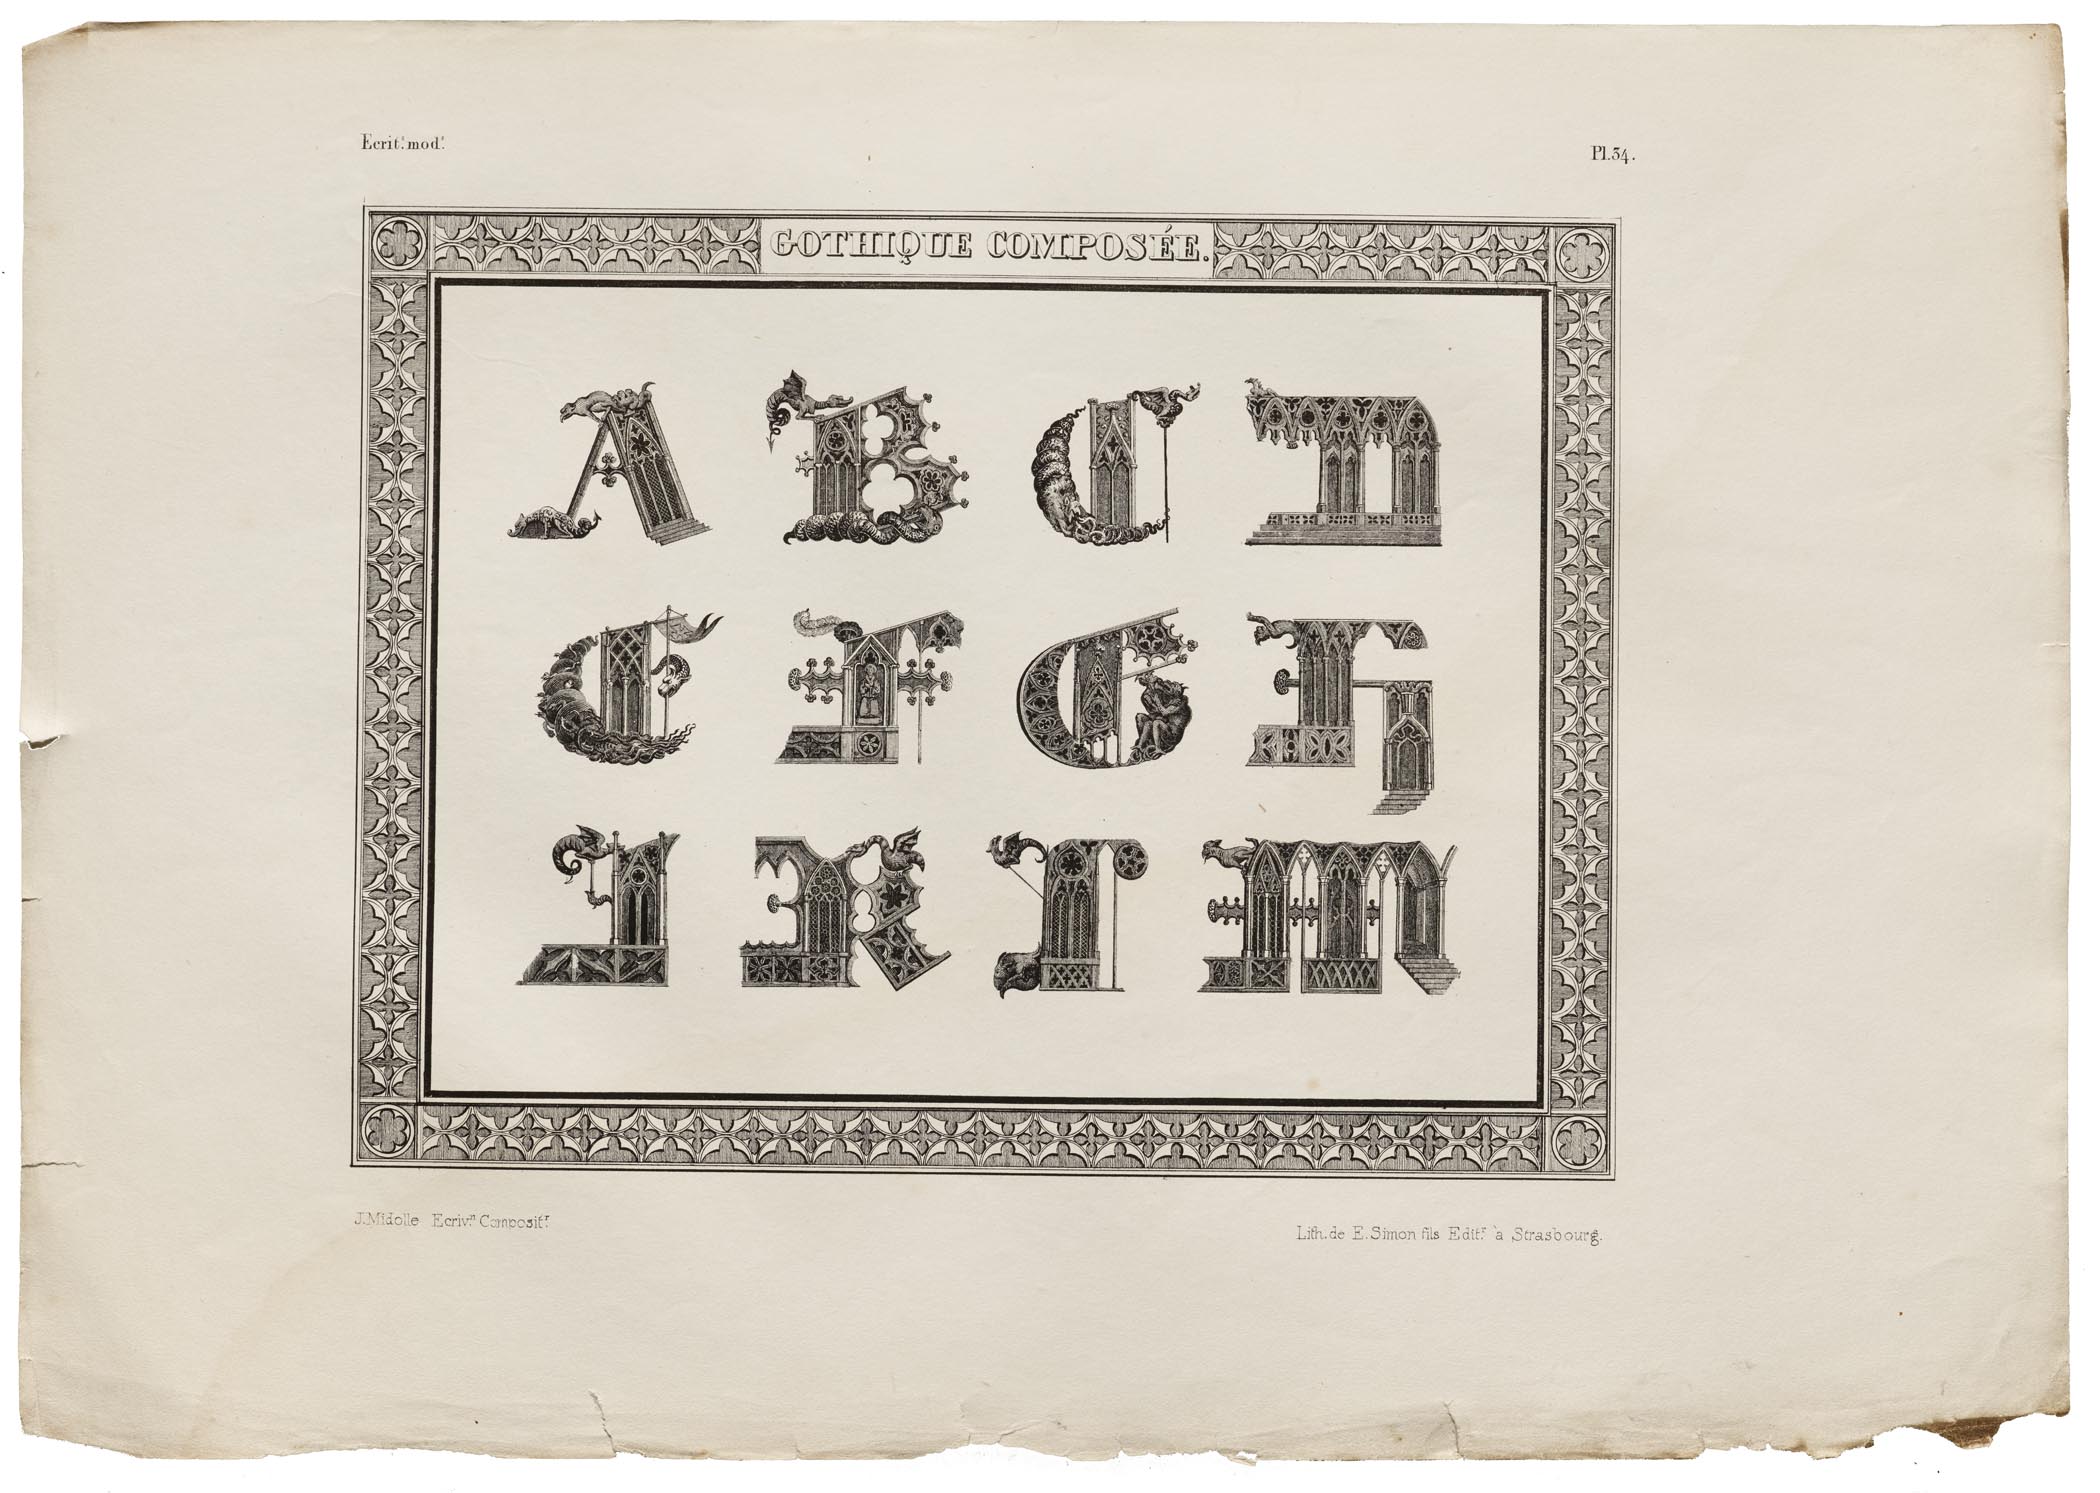 Jean Midolle, Gothique Composee (Black and White), Emile Simon fils press, France, 1835.